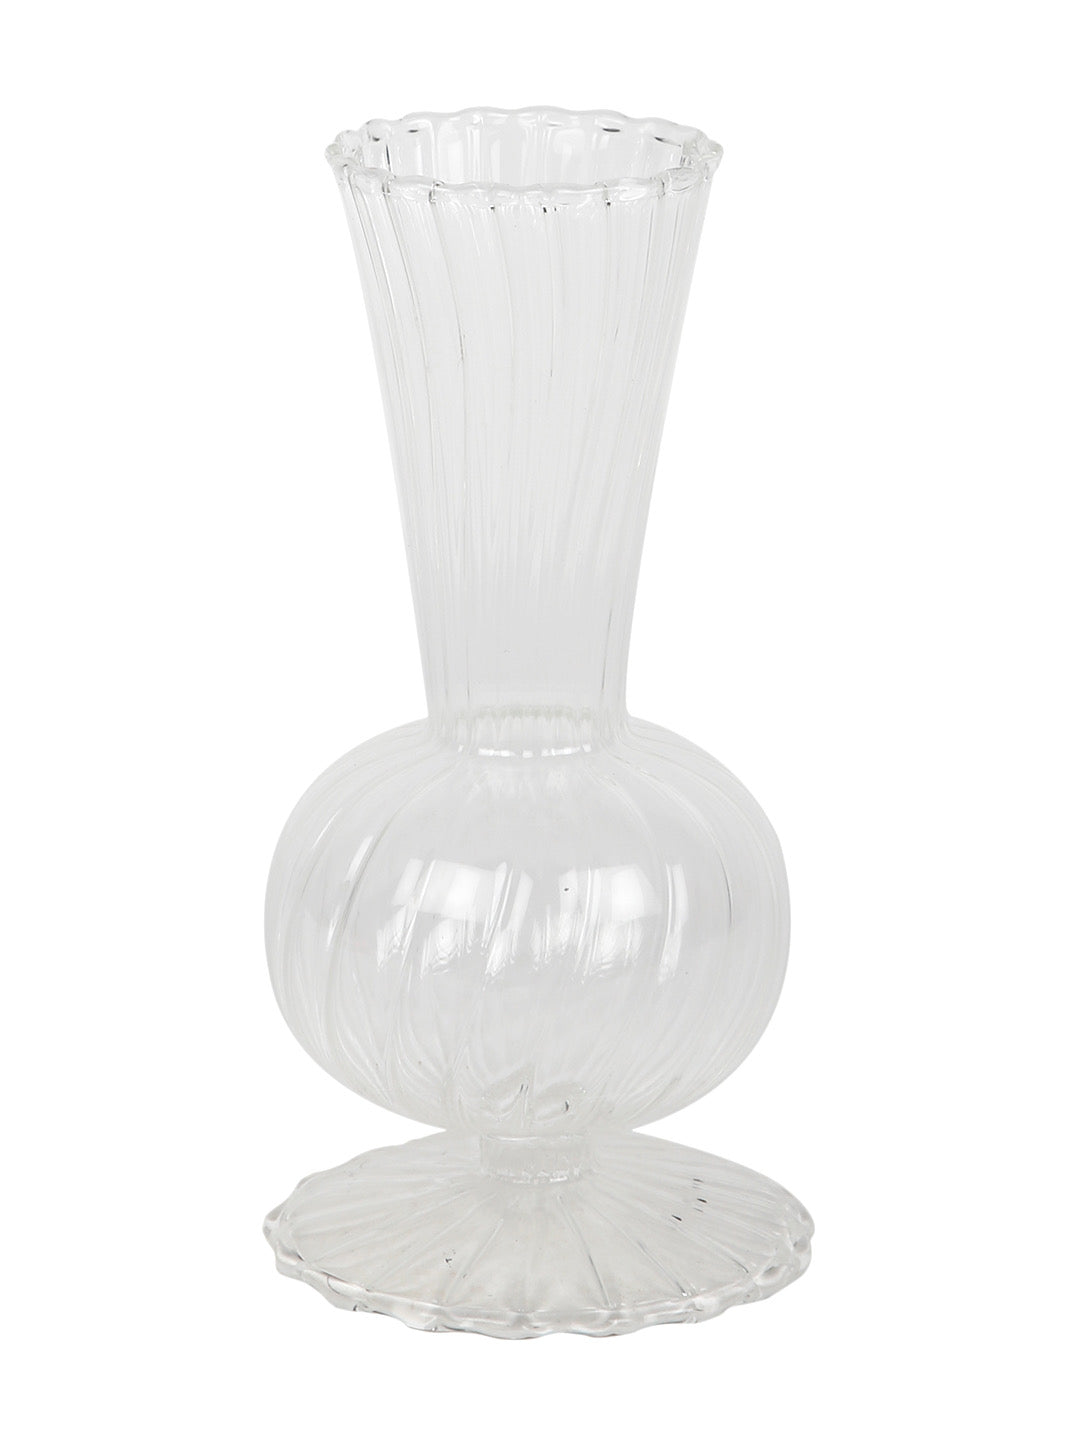 Textured transperant Glass Flower Vase - Default Title (VAS22010)